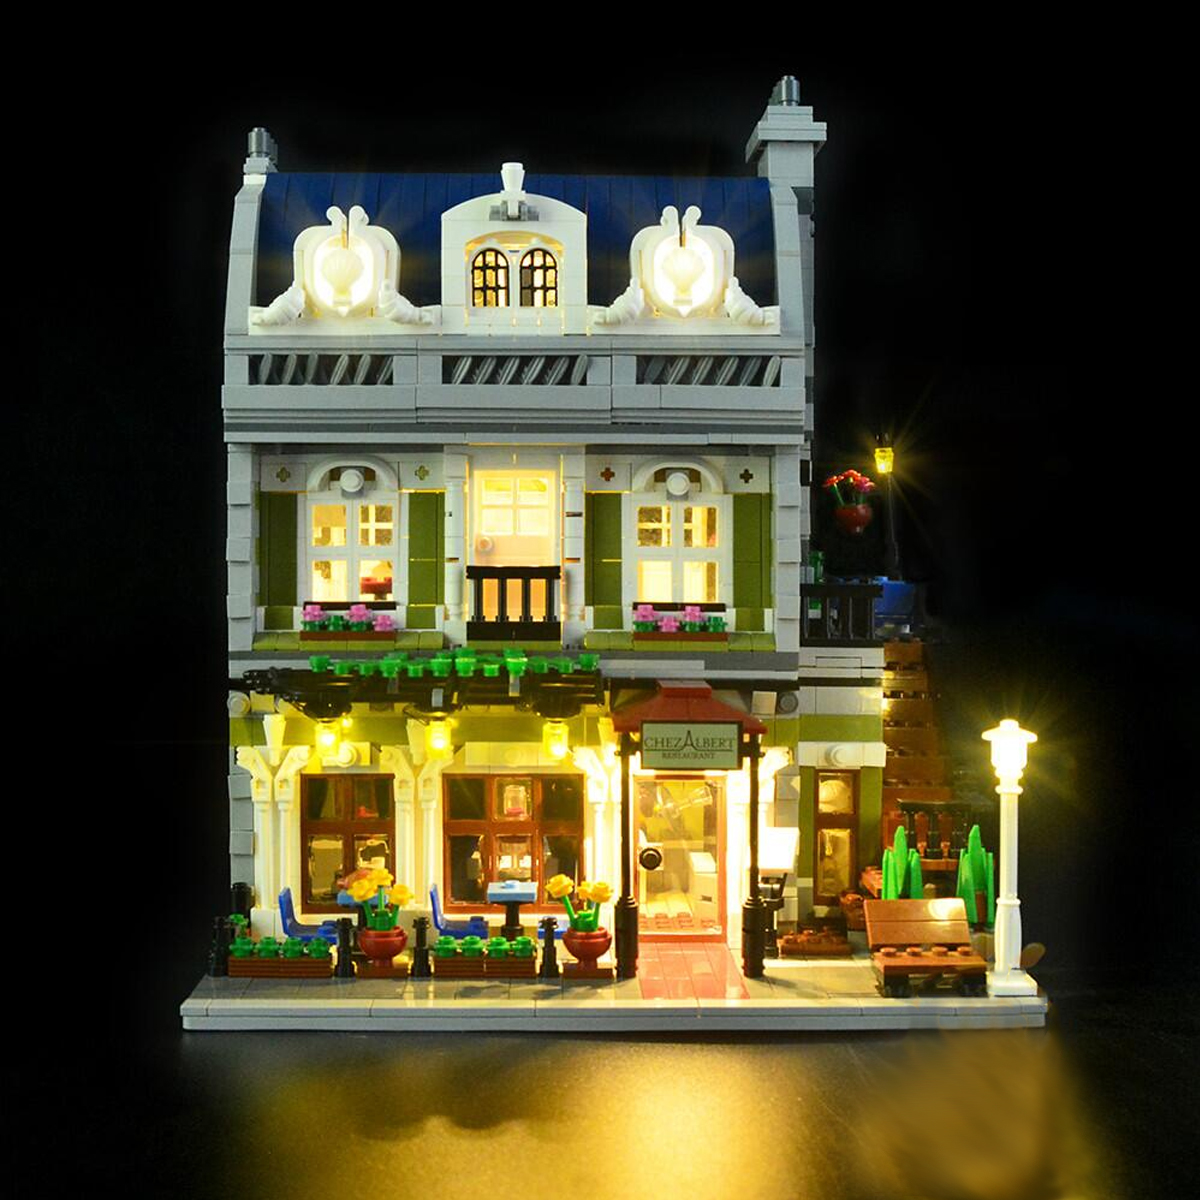 Universal-DIY-LED-Light-Brick-Kit-For-Lego-MOC-Toys-USB-Port-Blocks-Accessories-Decor-1444426-2